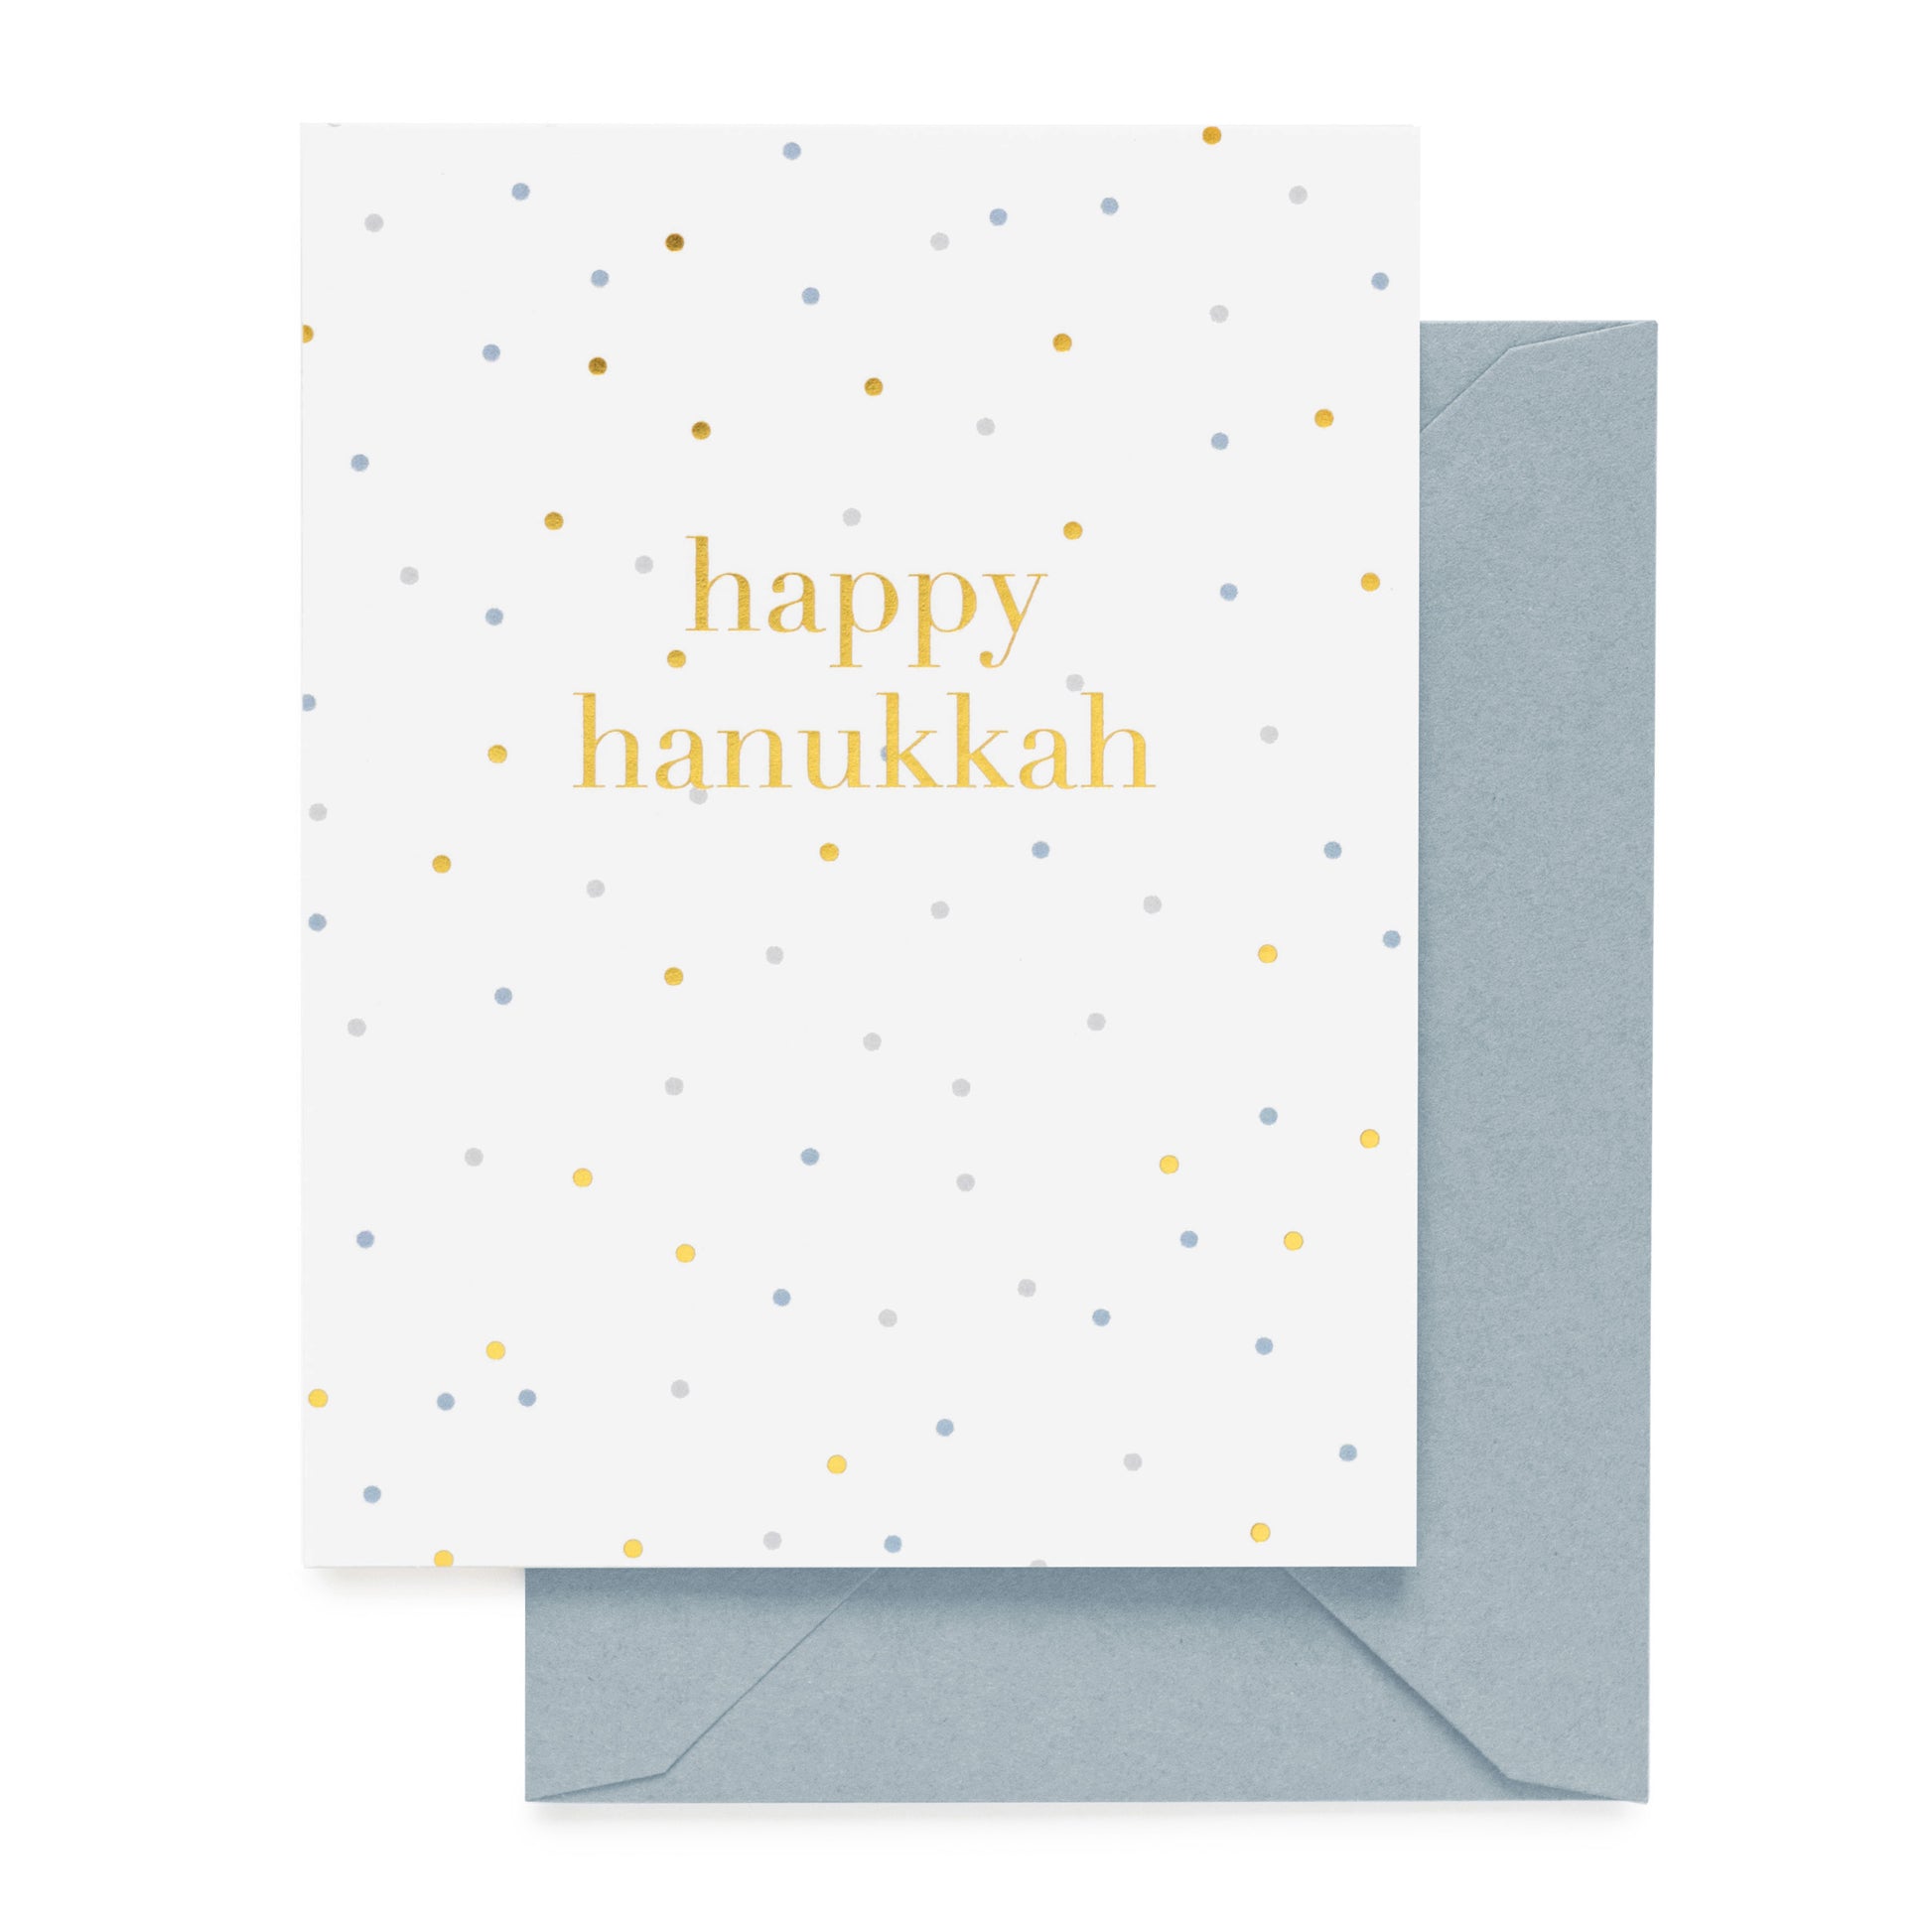 happy hanukkah card with slate blue envelope